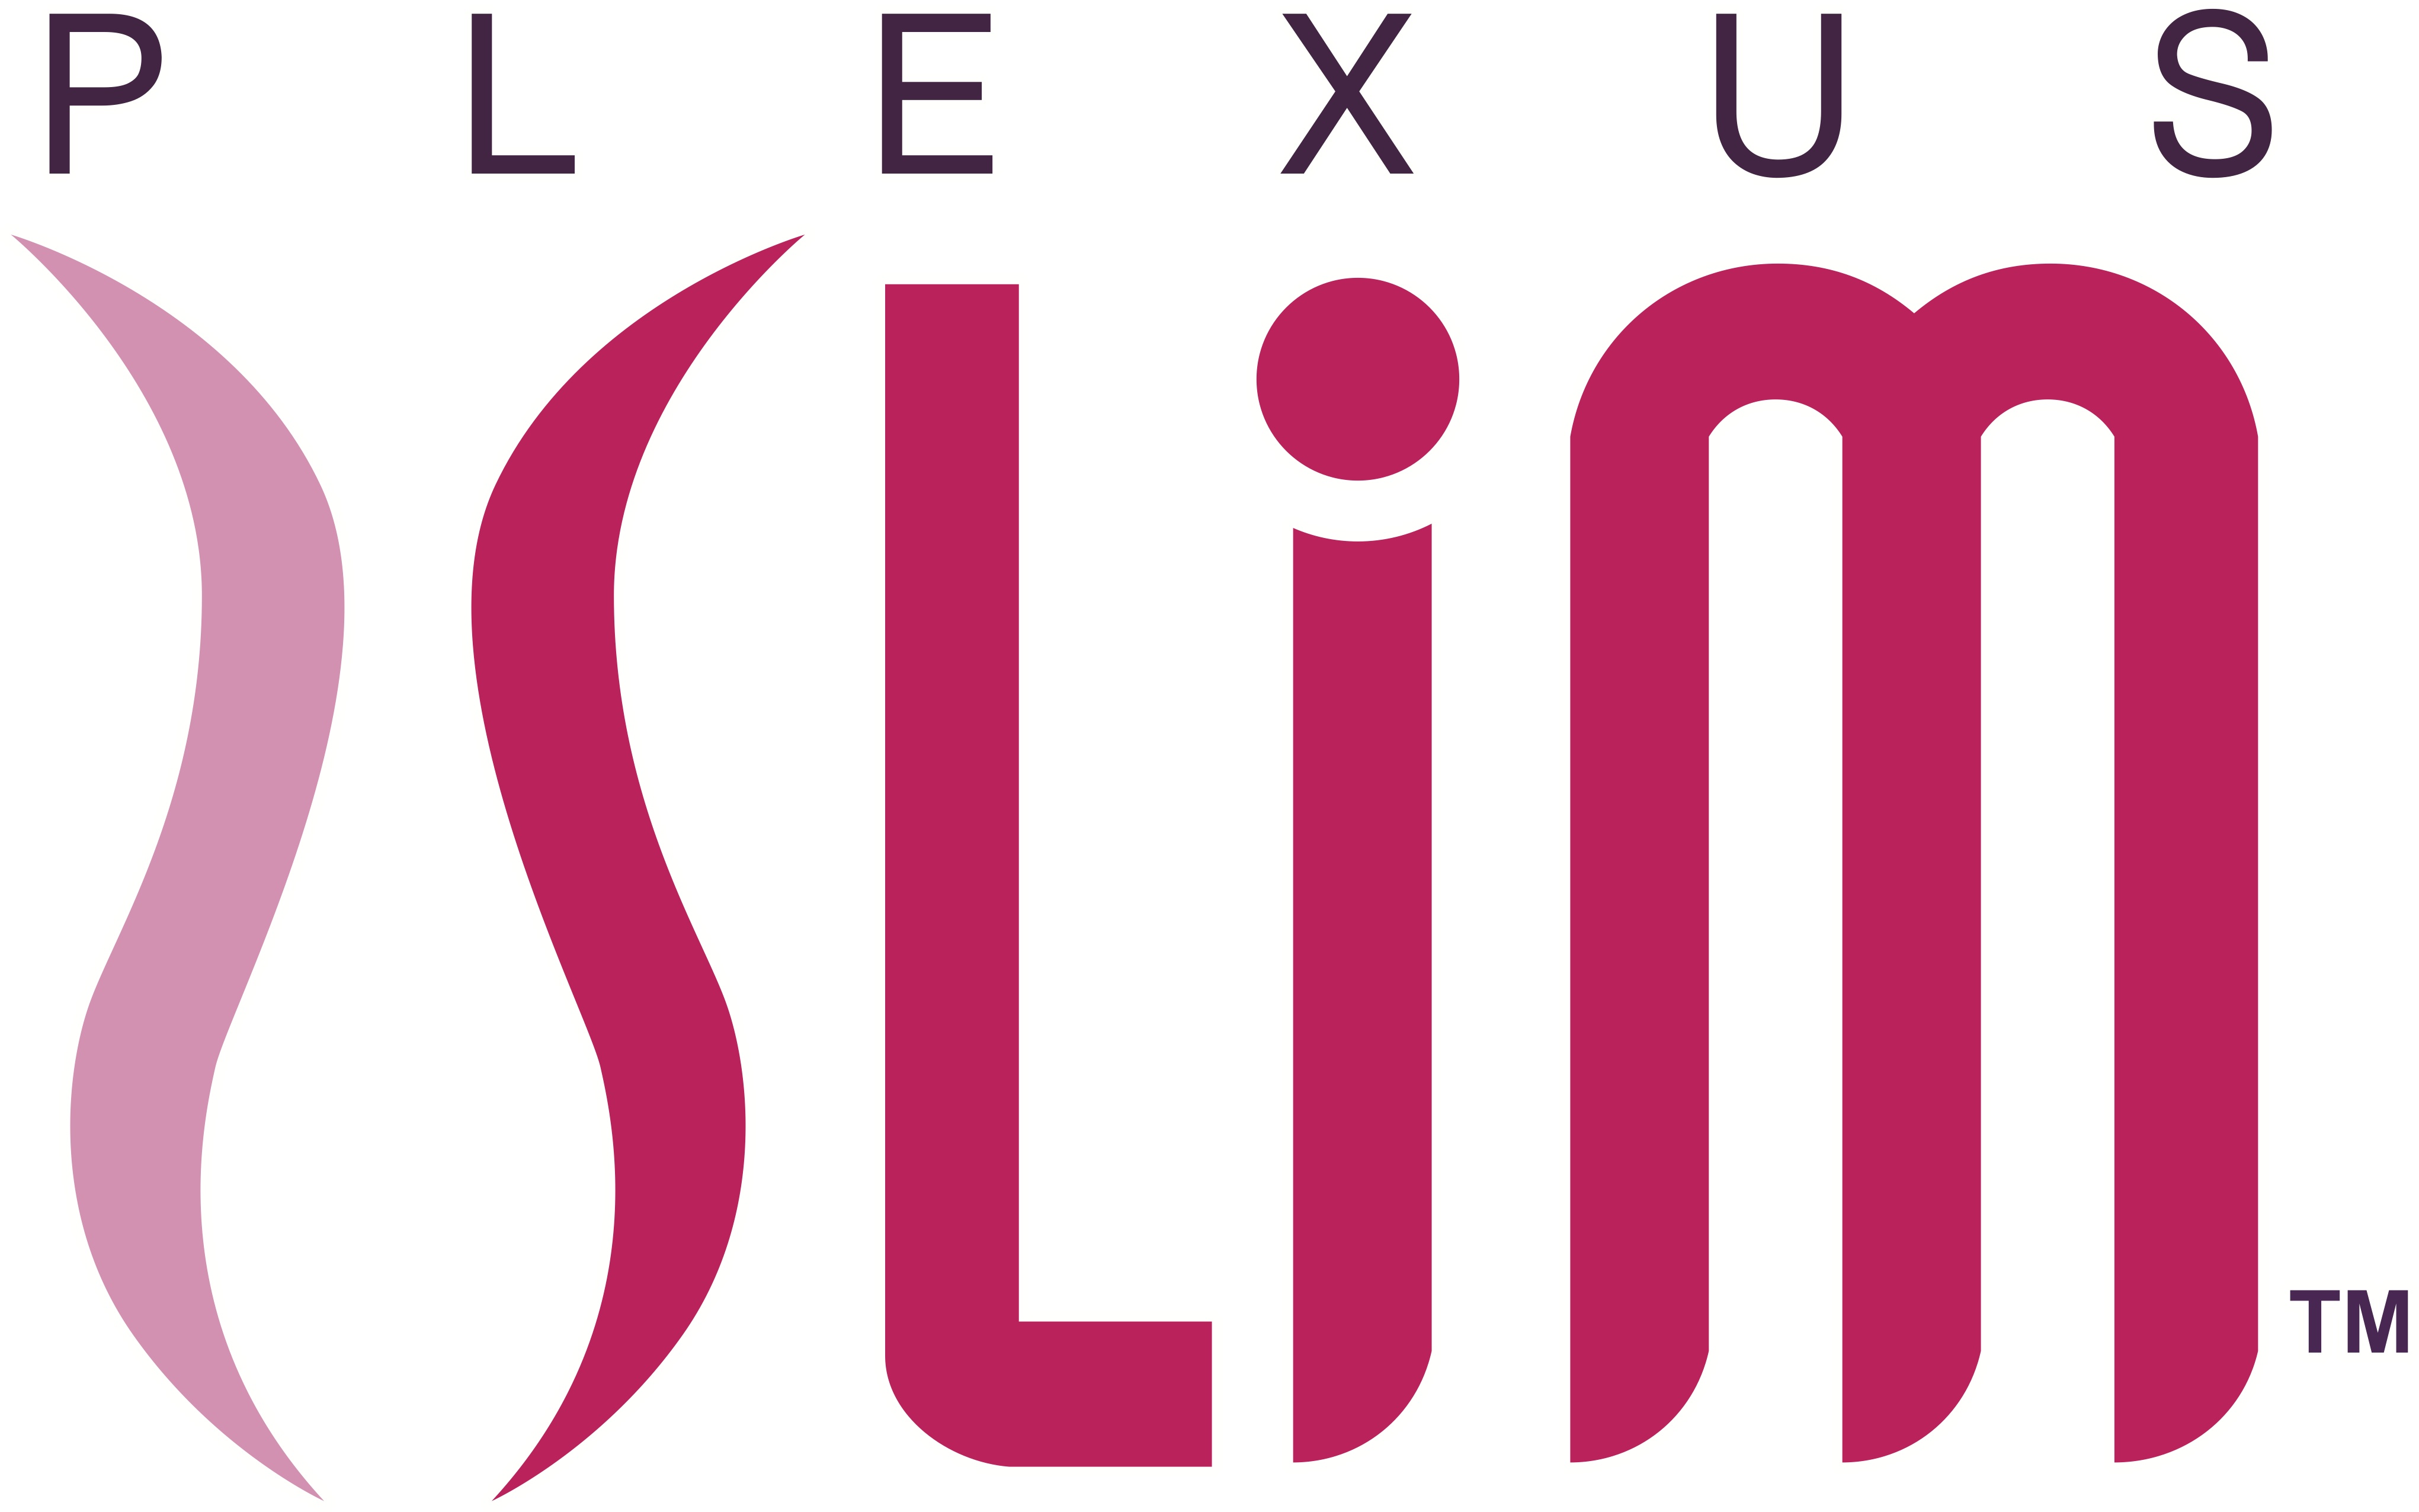 plexus slim chromium side effects